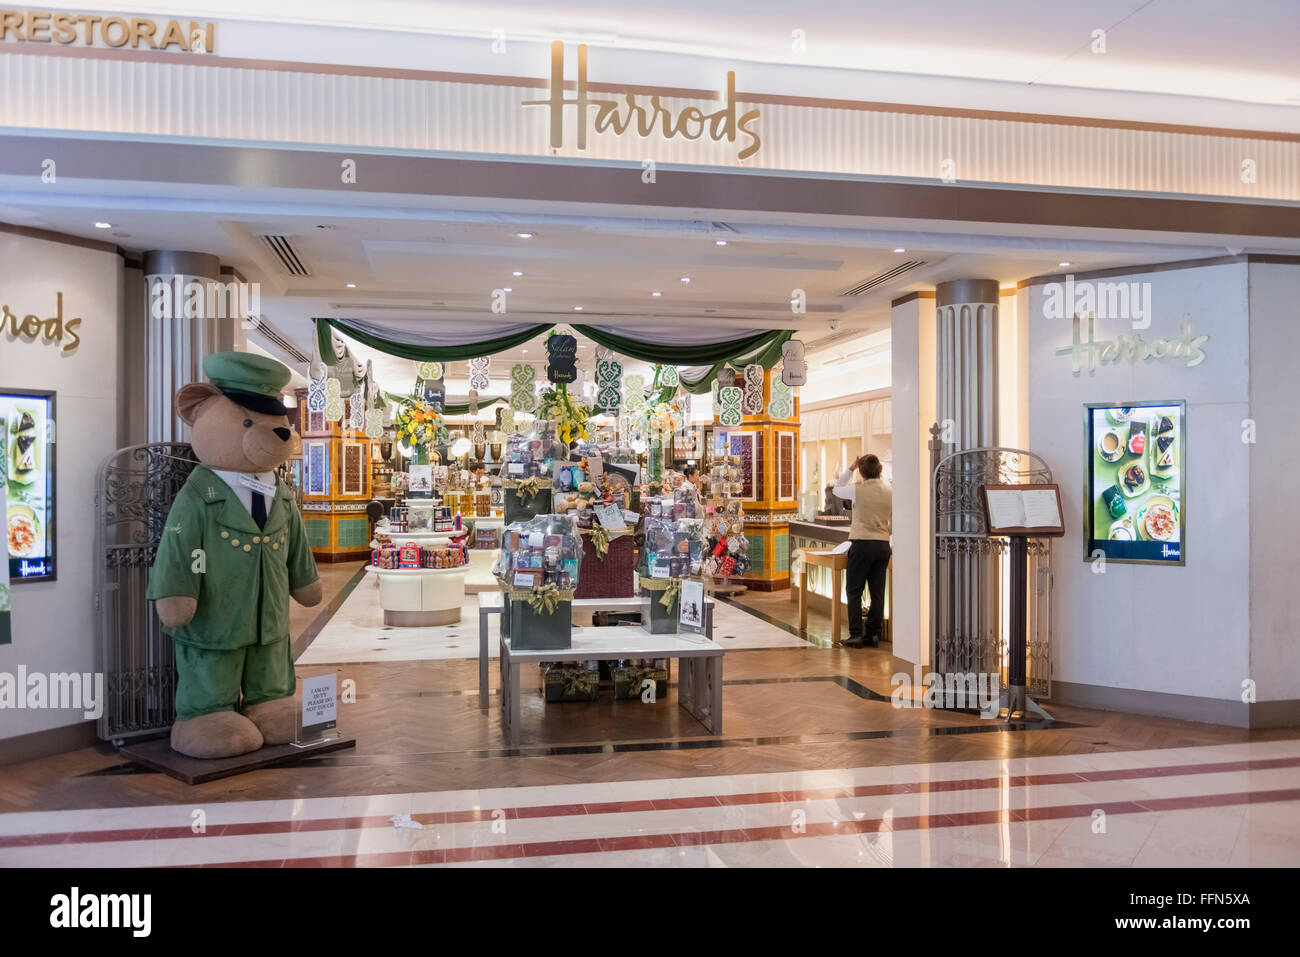 Almacenes Harrods en el centro comercial Suria KLCC, Kuala Lumpur, Malasia Foto de stock